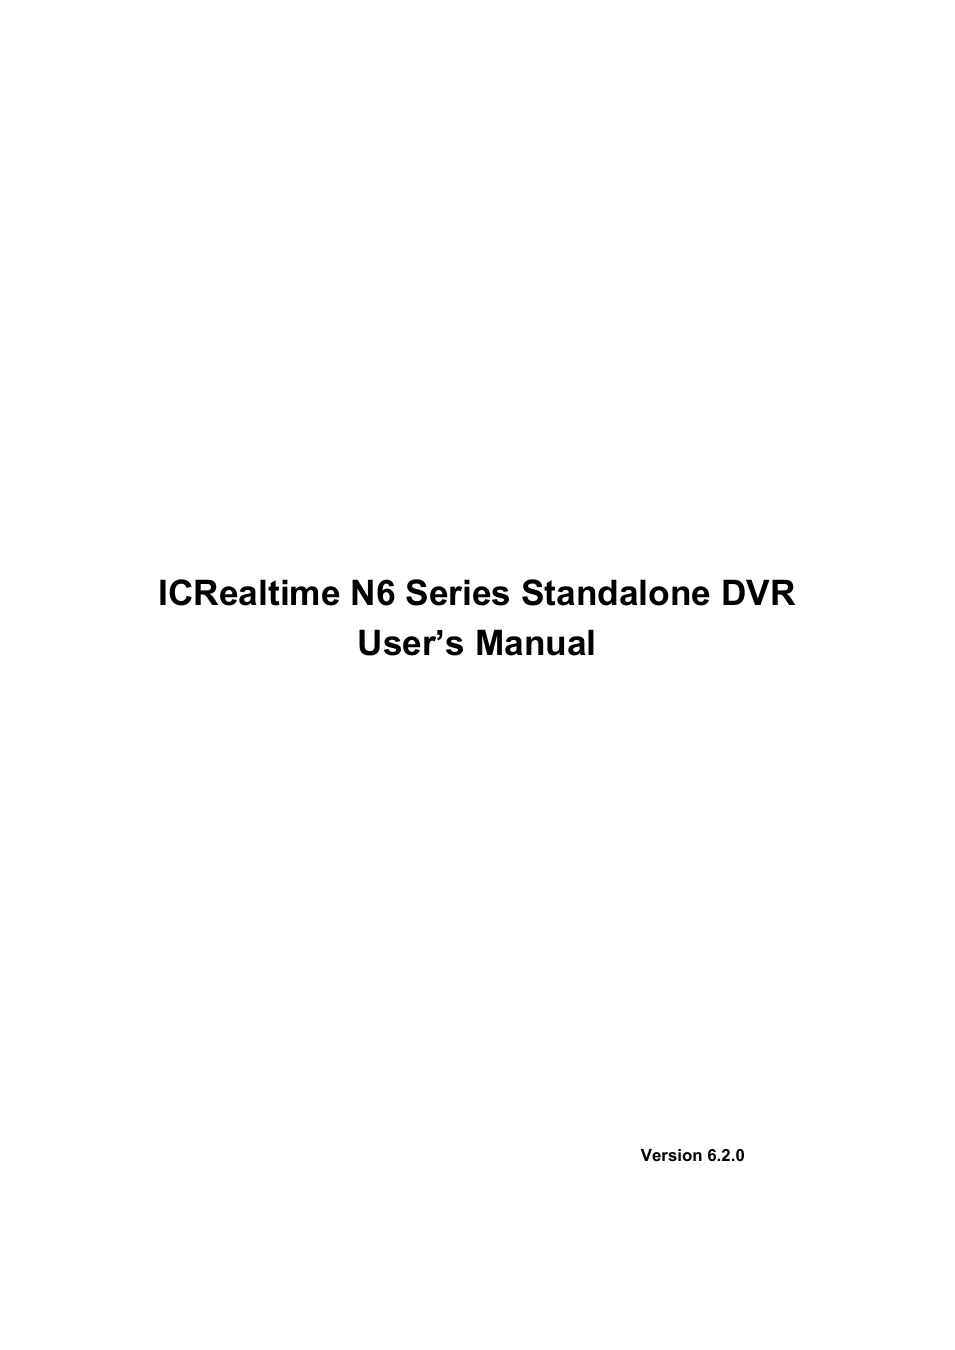 Flex Series: 4-CH High Performance H.264E 2U DVR with DVD-RW